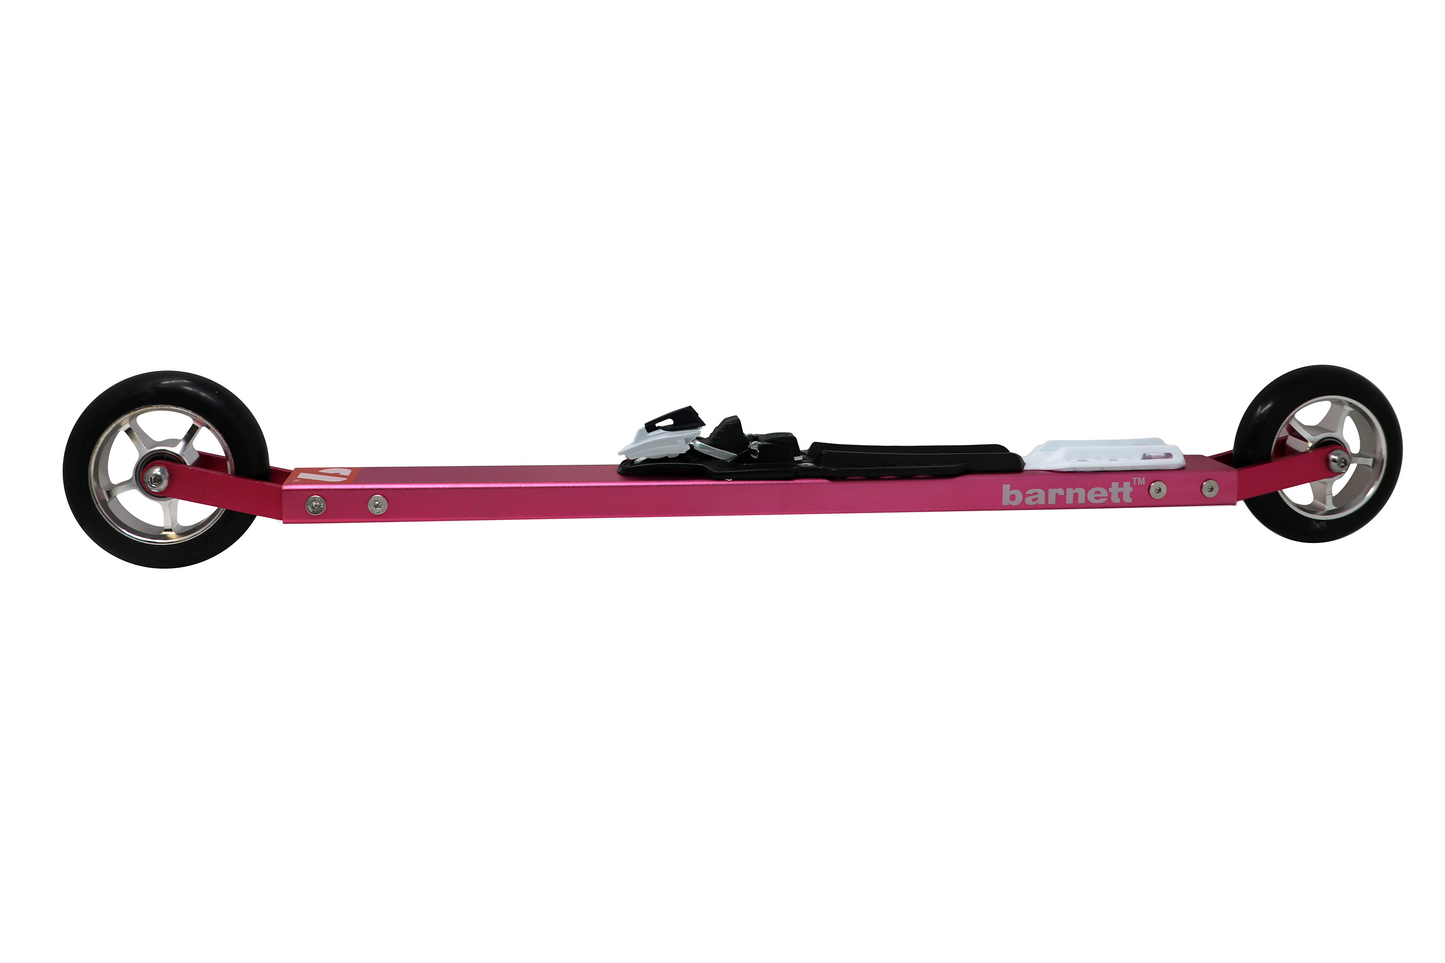 RSE-610 Binding NNN Roller ski, PINK